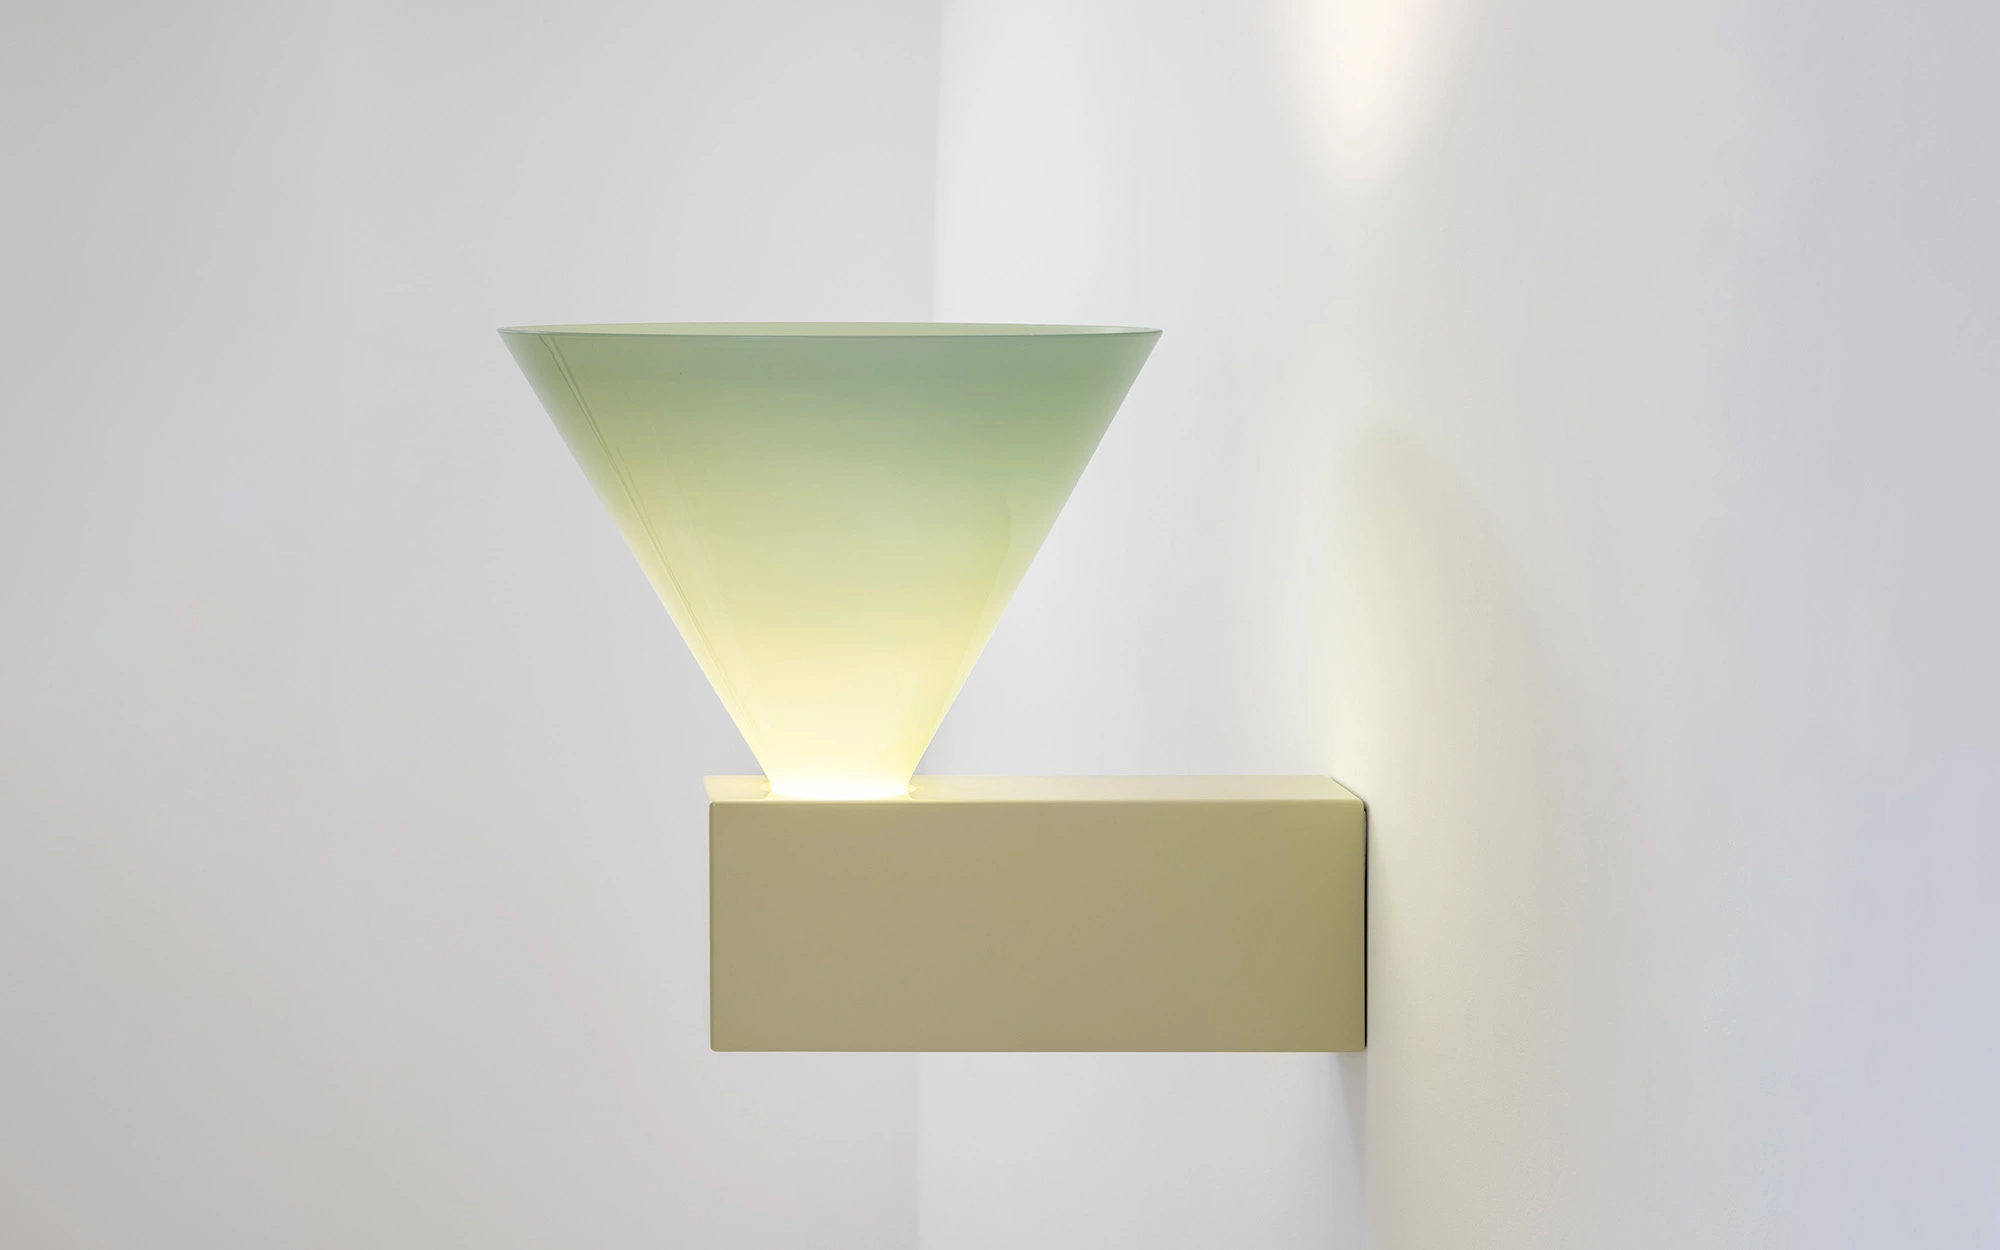 Signal W MONOCHROMATIC - Edward Barber and Jay Osgerby - Pendant light - Galerie kreo